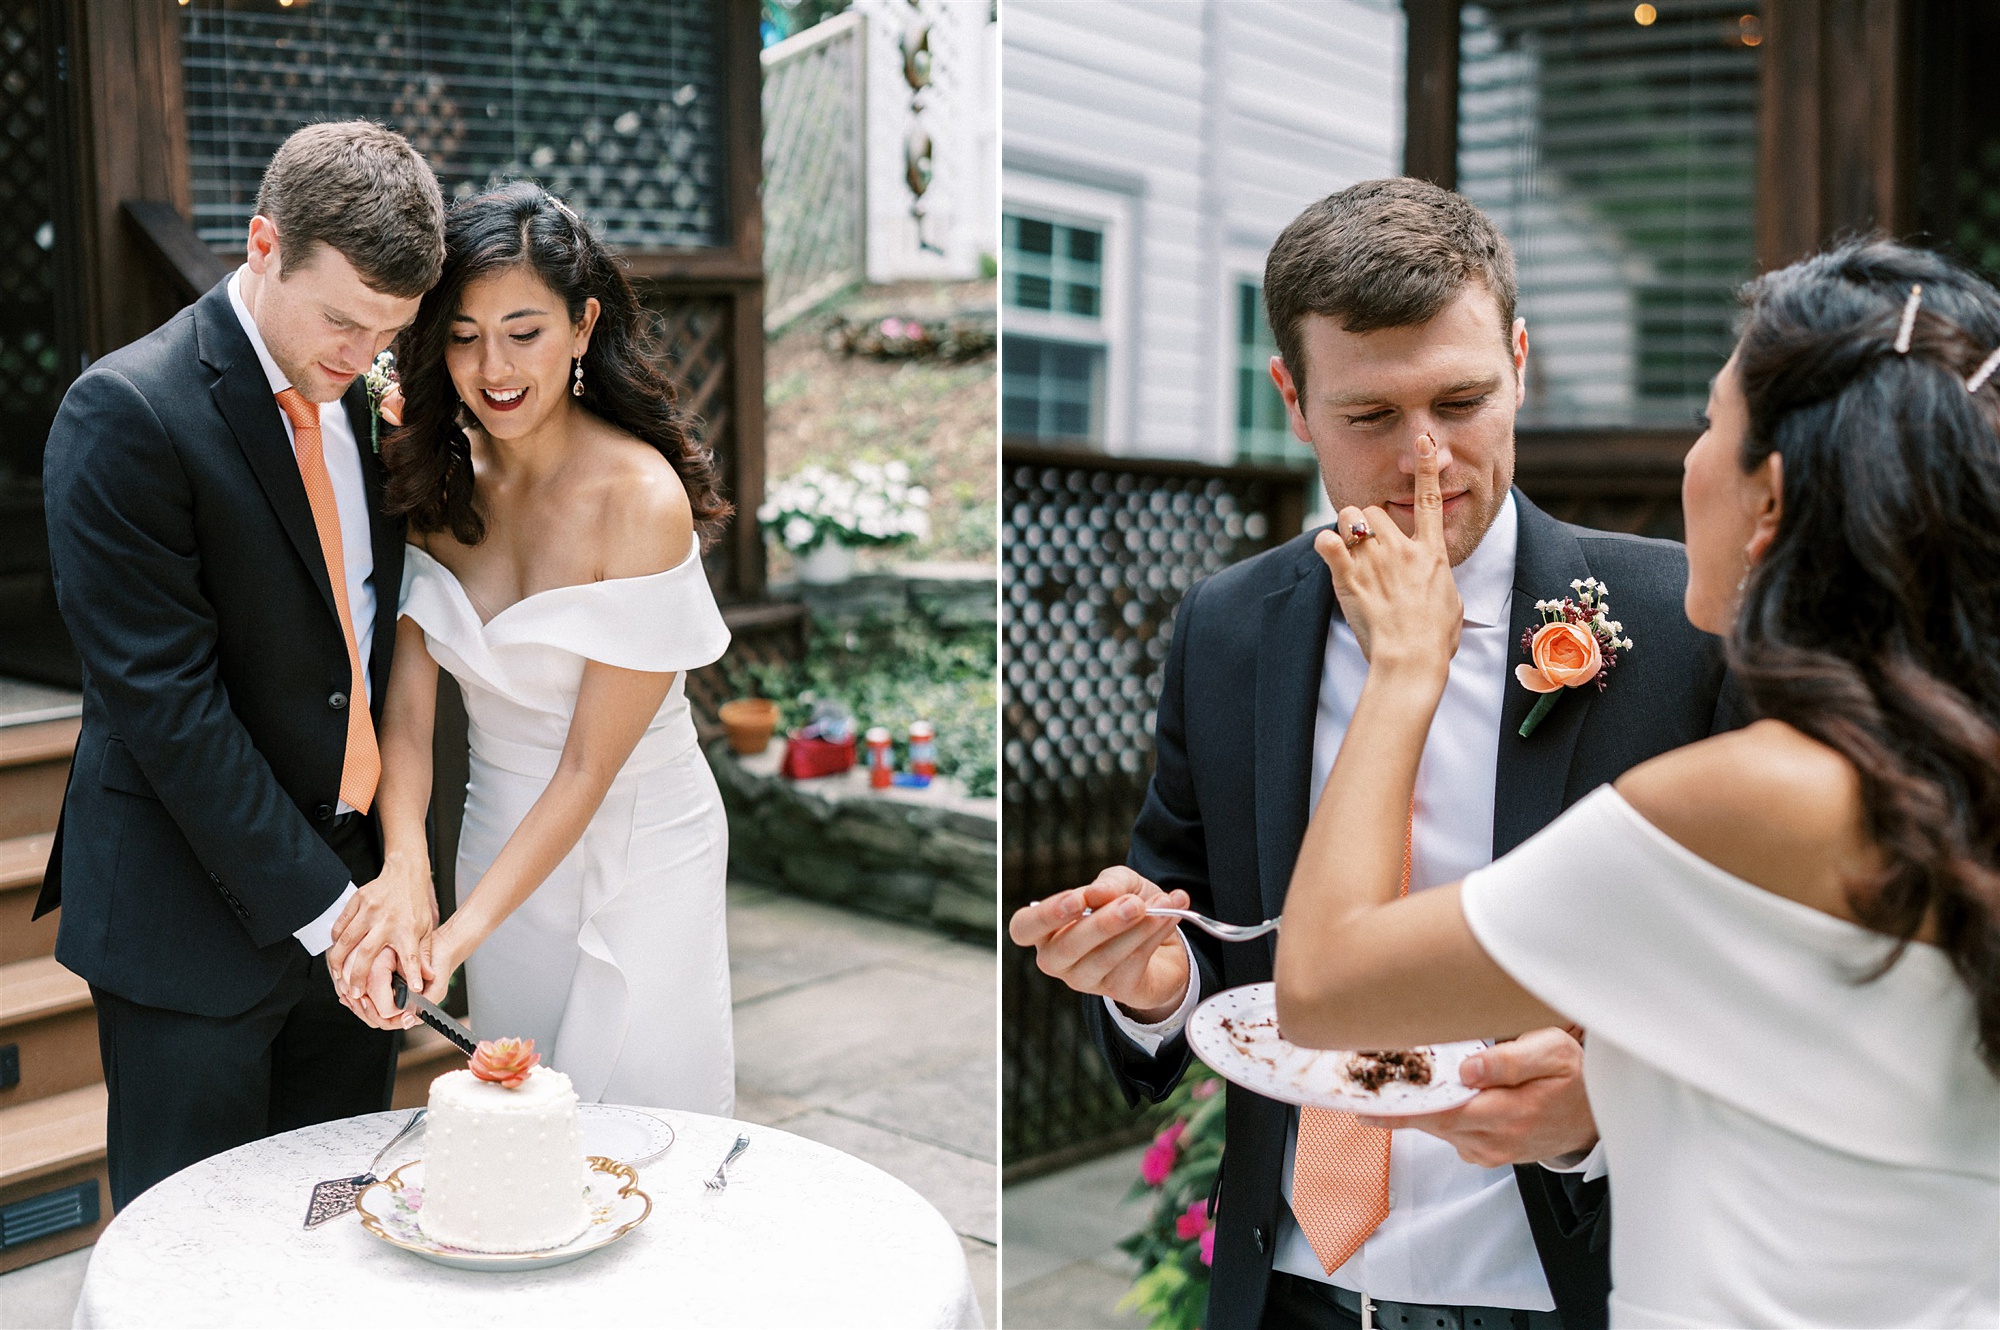 intimate backyard wedding cake cutting